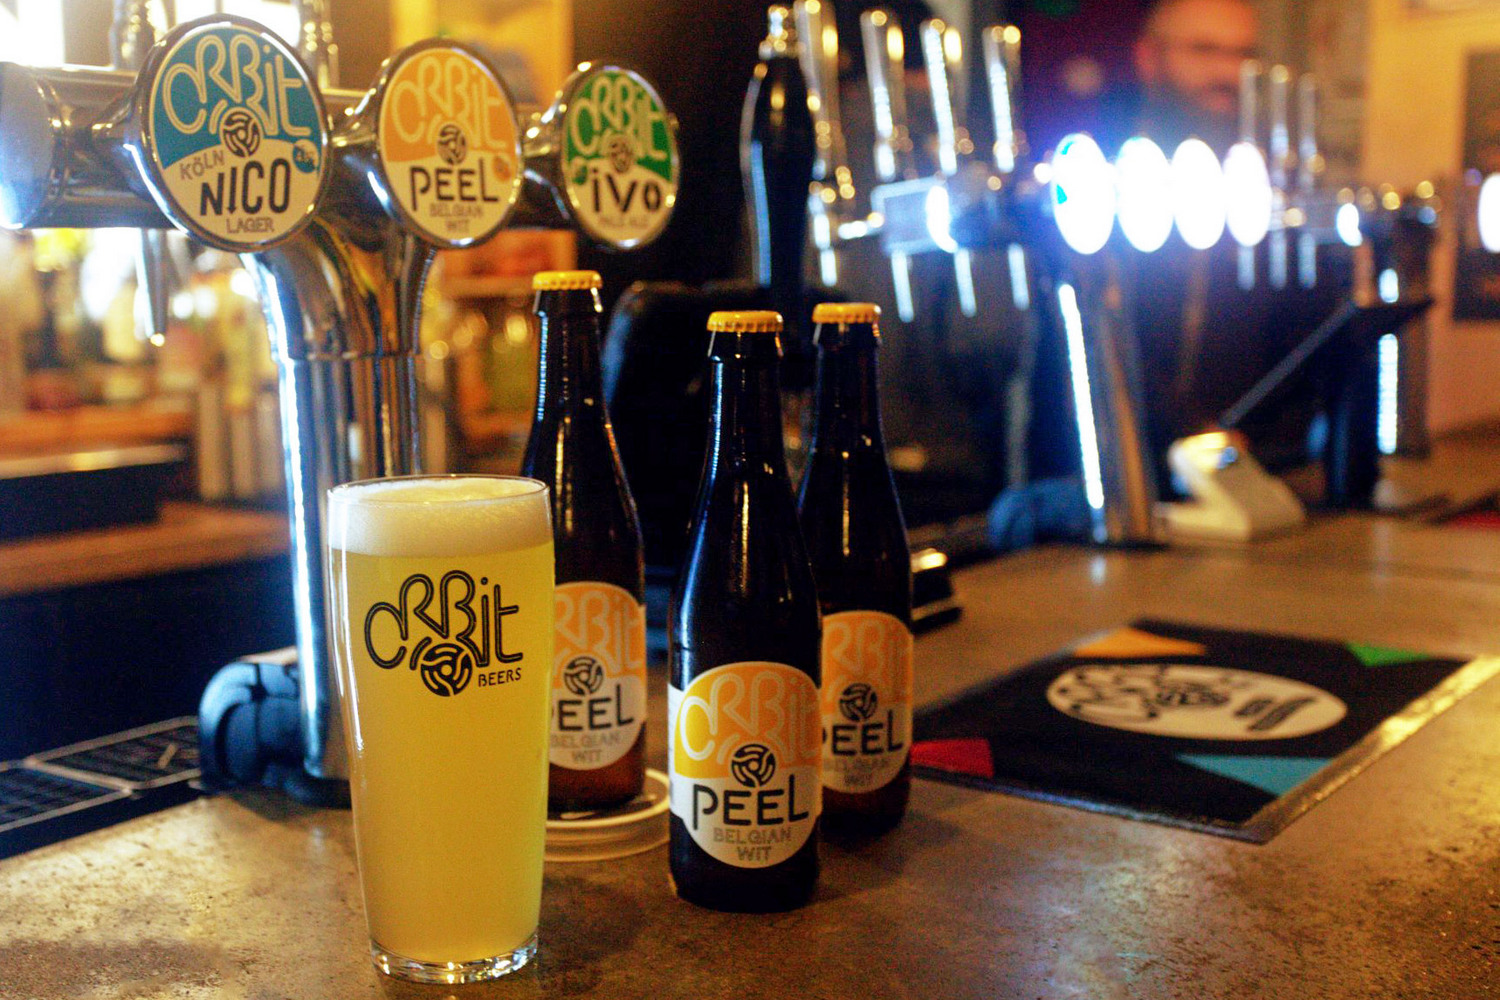 Orbit Beers Refreshes Core Range with New Belgian Wit